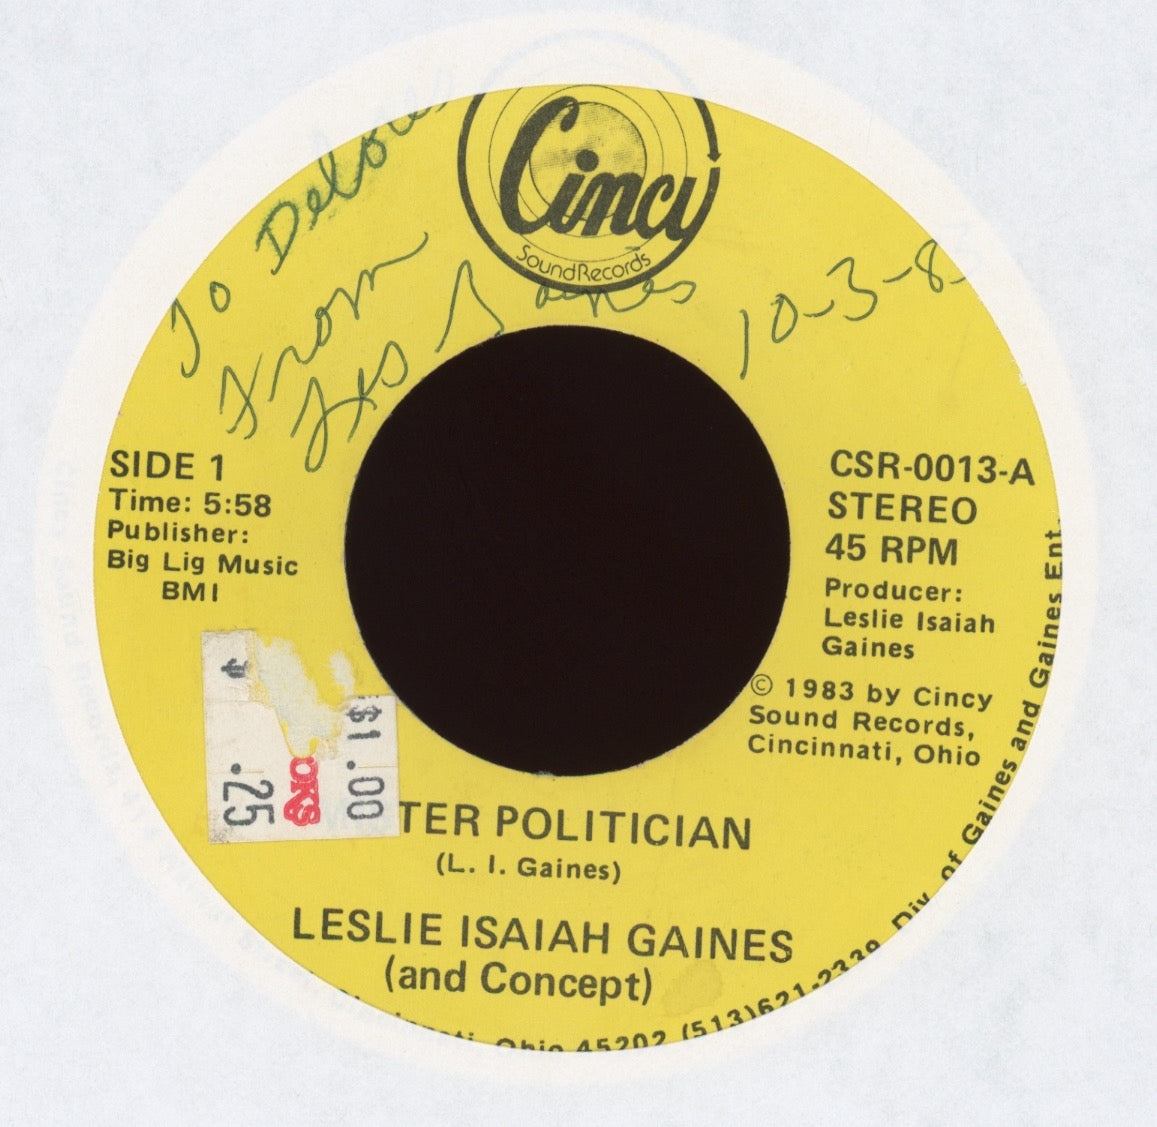 Leslie Isaiah Gaines - Mister Politician on Cincy Sound